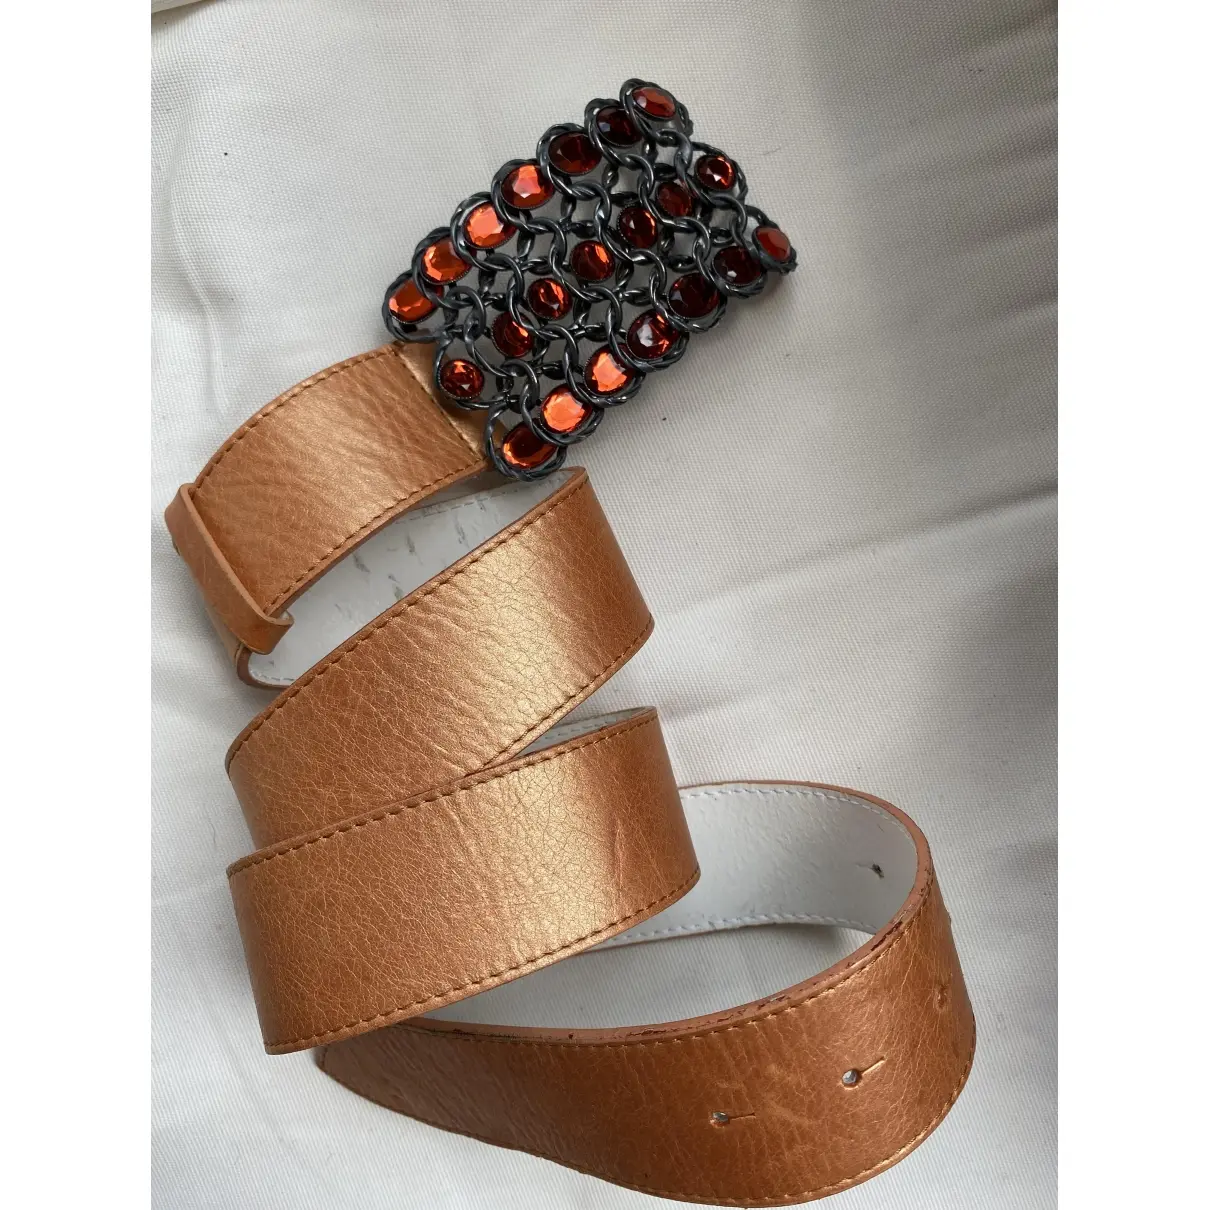 Buy Orciani Leather belt online